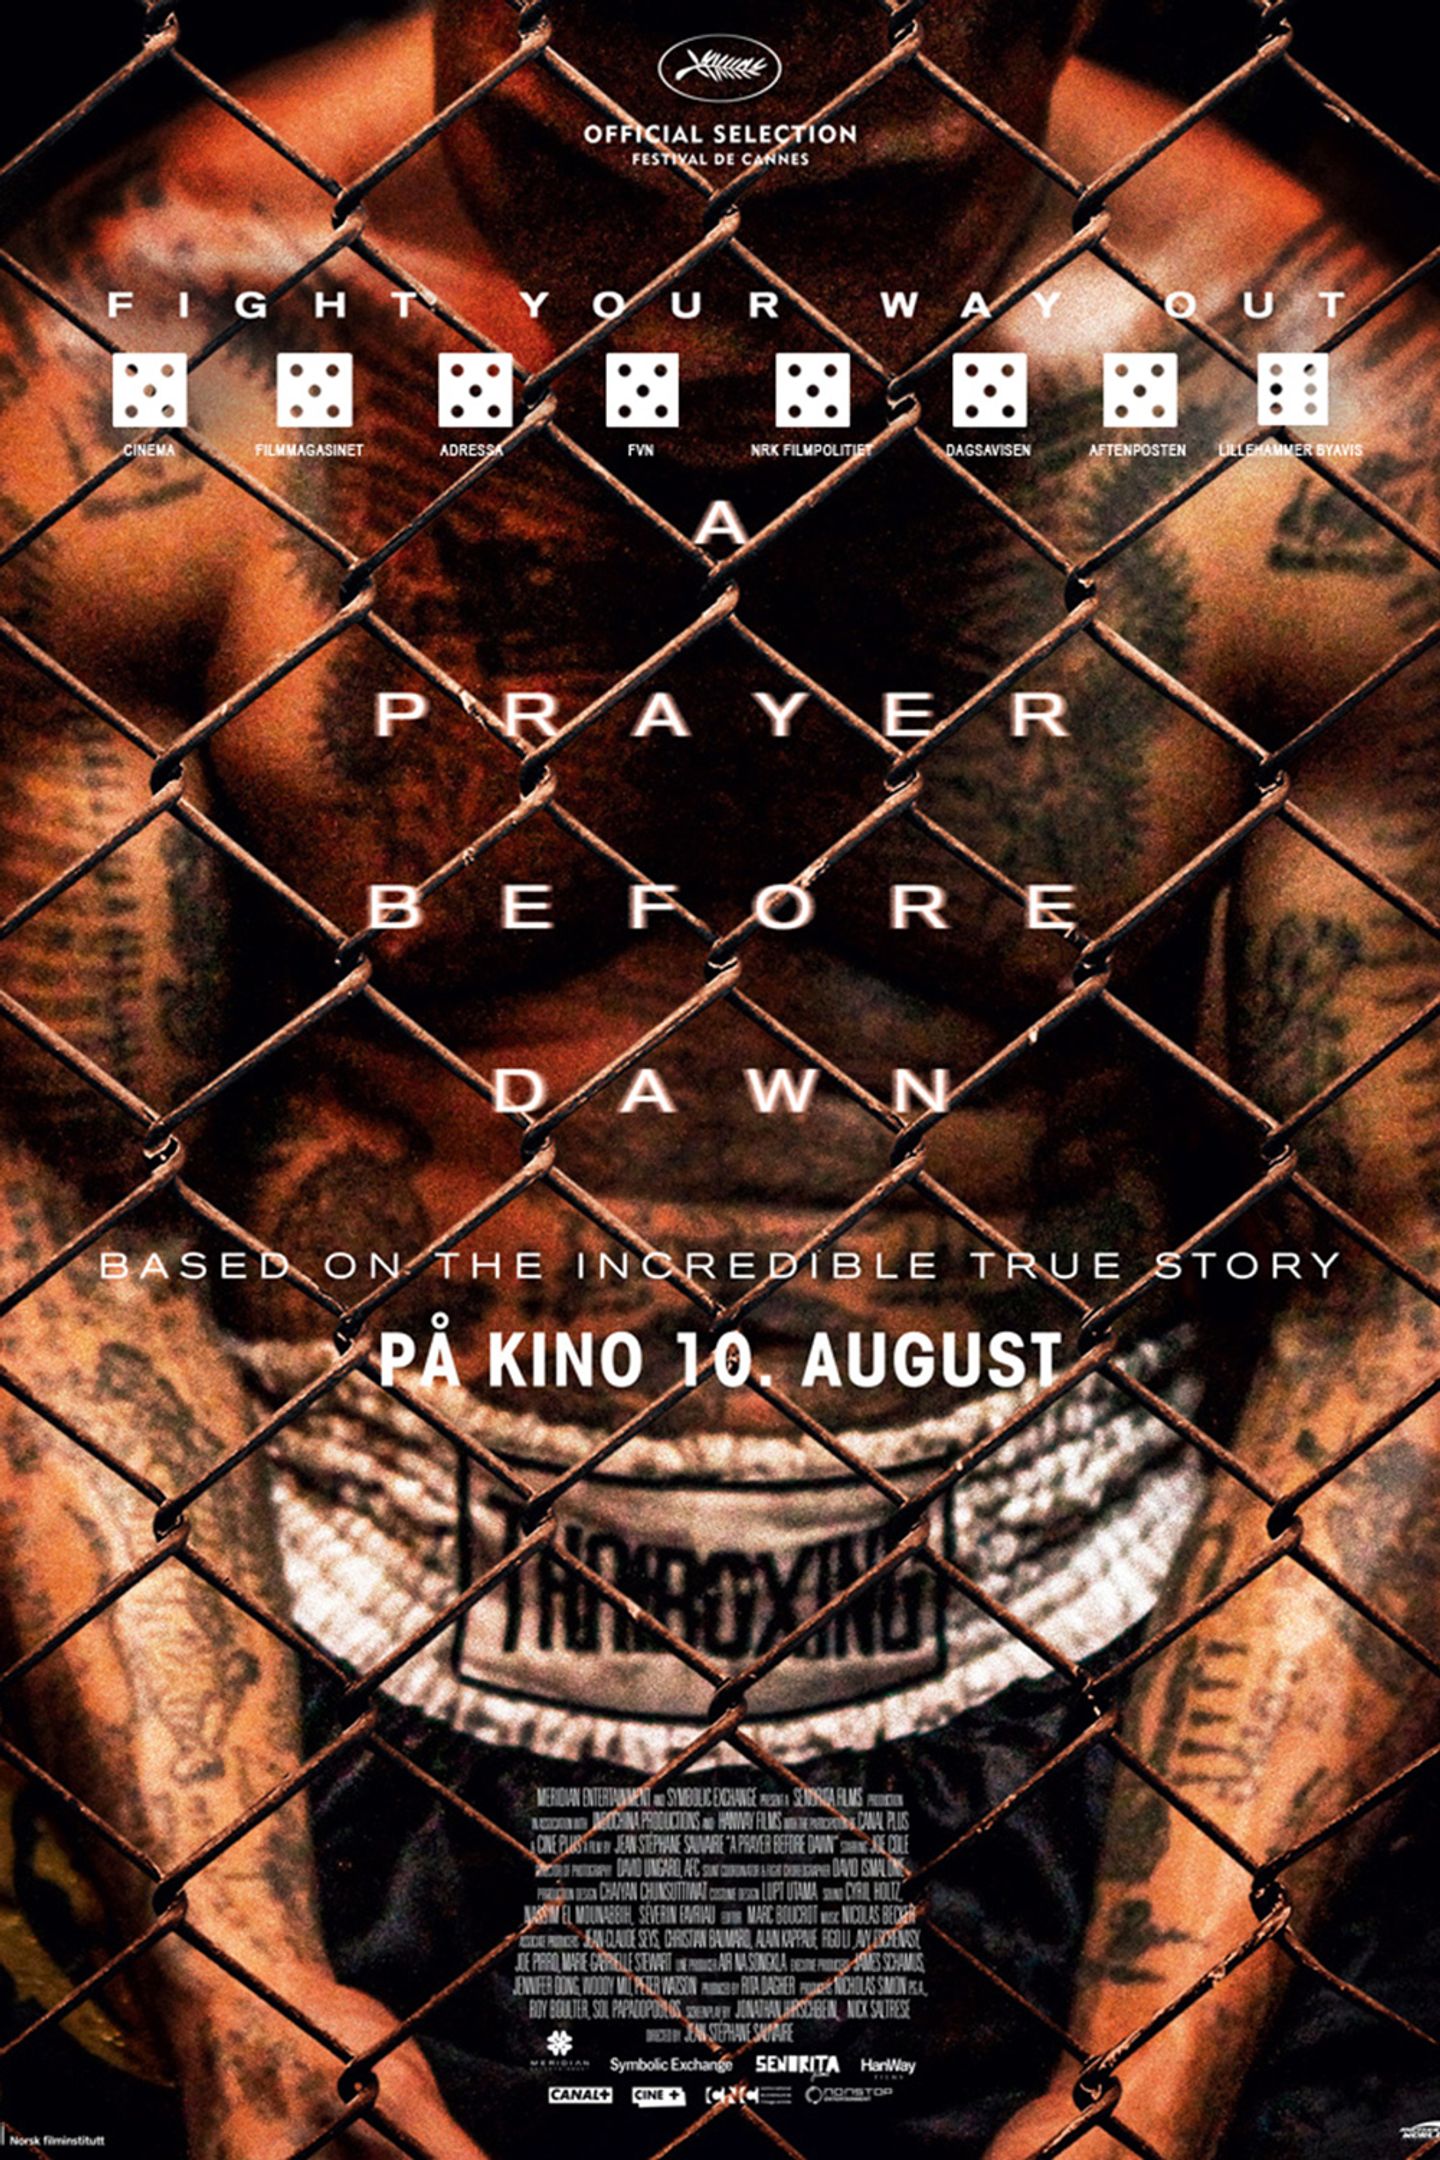 Plakat for 'A Prayer Before Dawn'